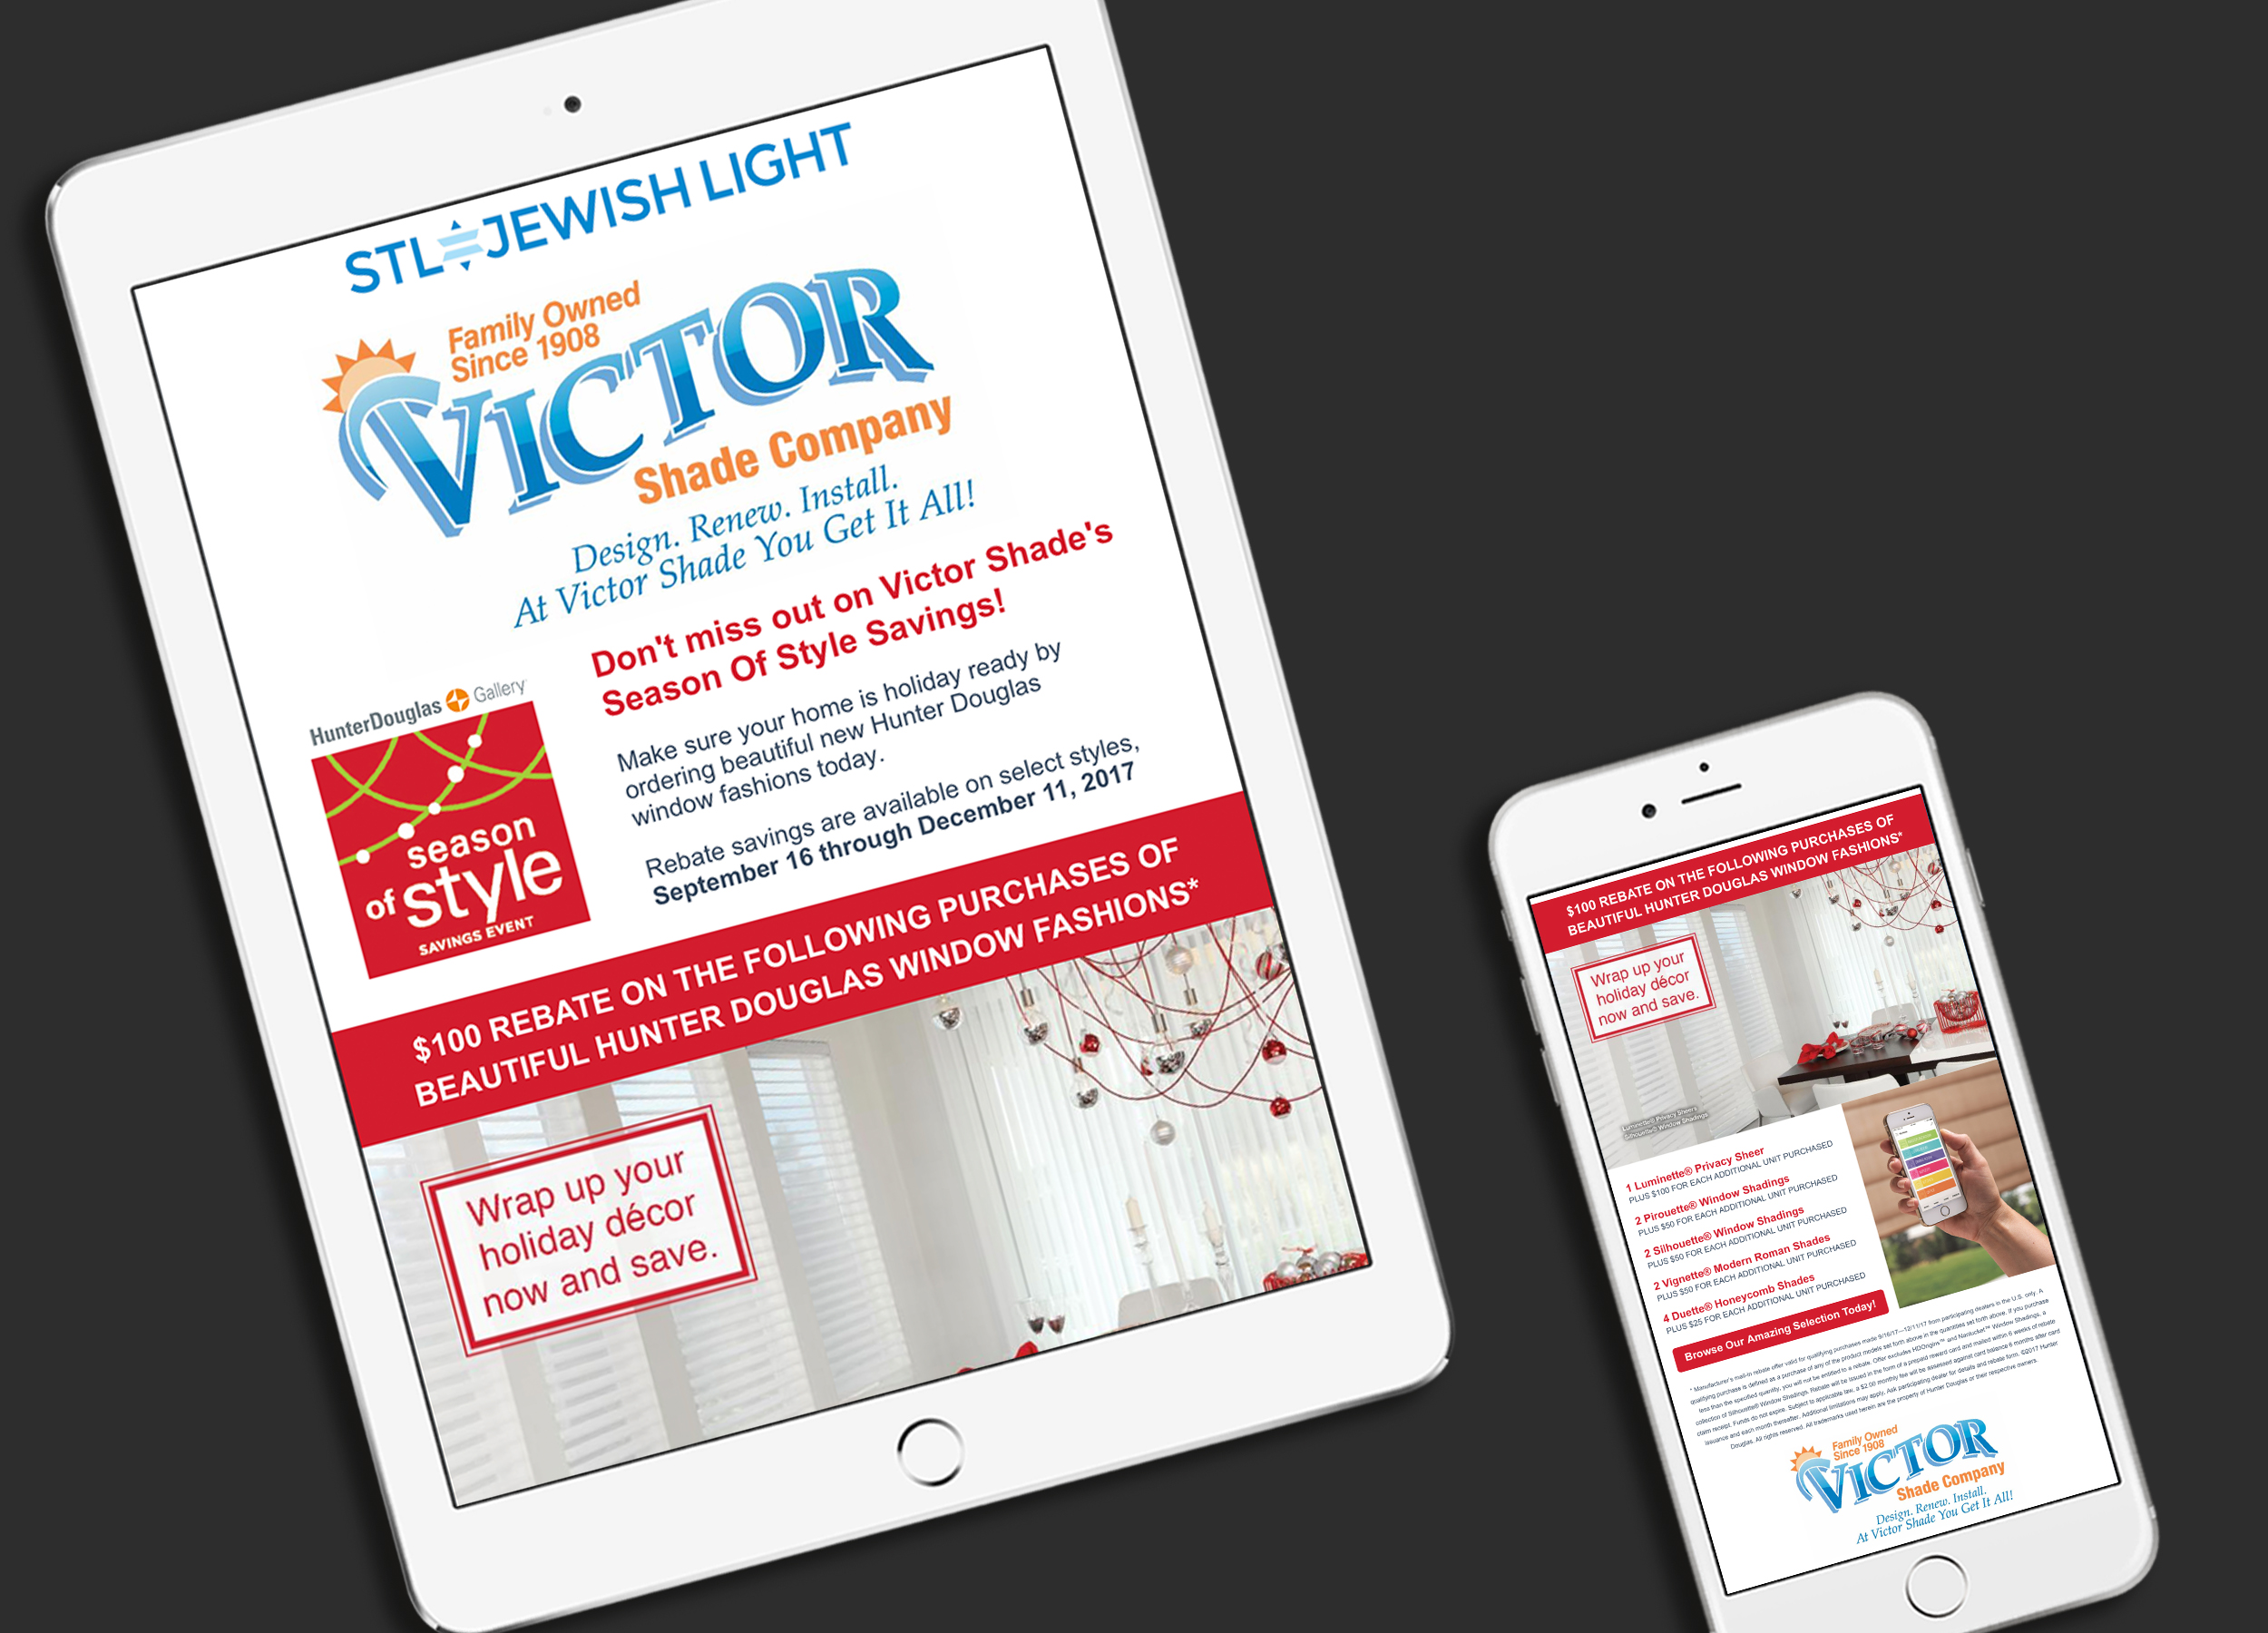 St. Louis Jewish Light - Advertising Design Victor Shade Company Email Design Portfolio Image - Designs by Martin Holloway